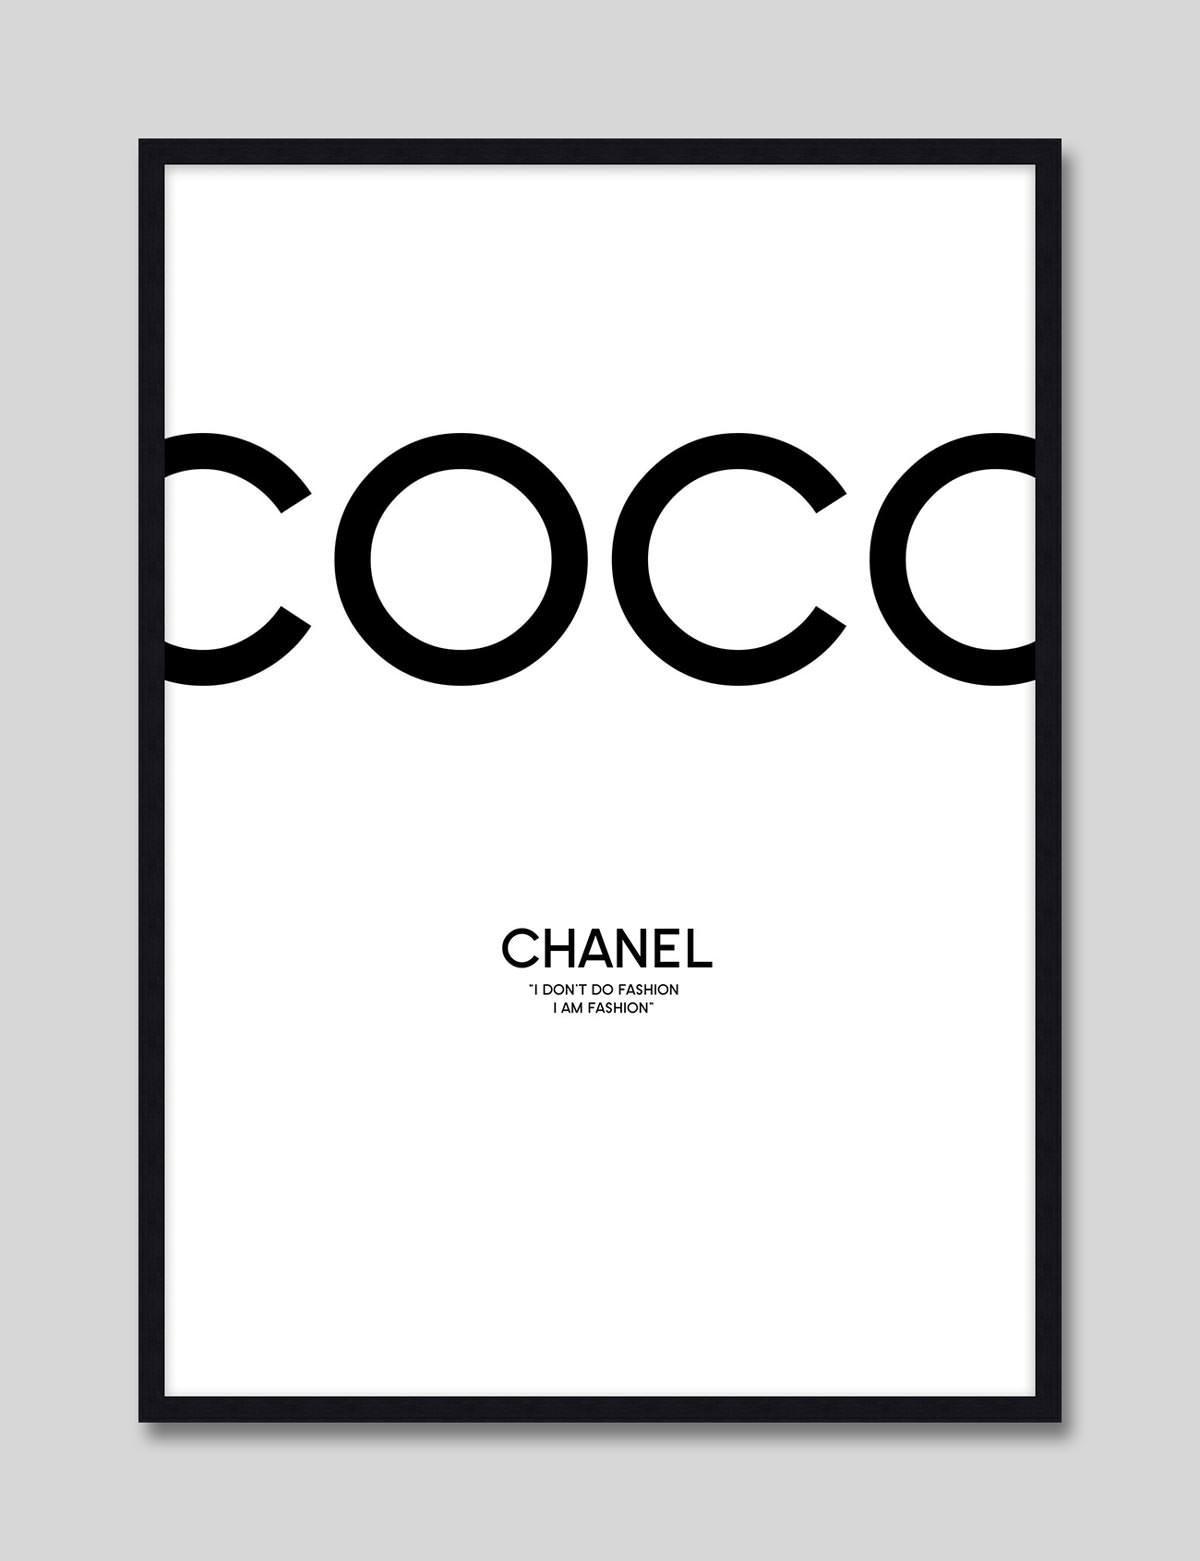 Coco Chanel poster  Posters with fashion citations  deseniocouk